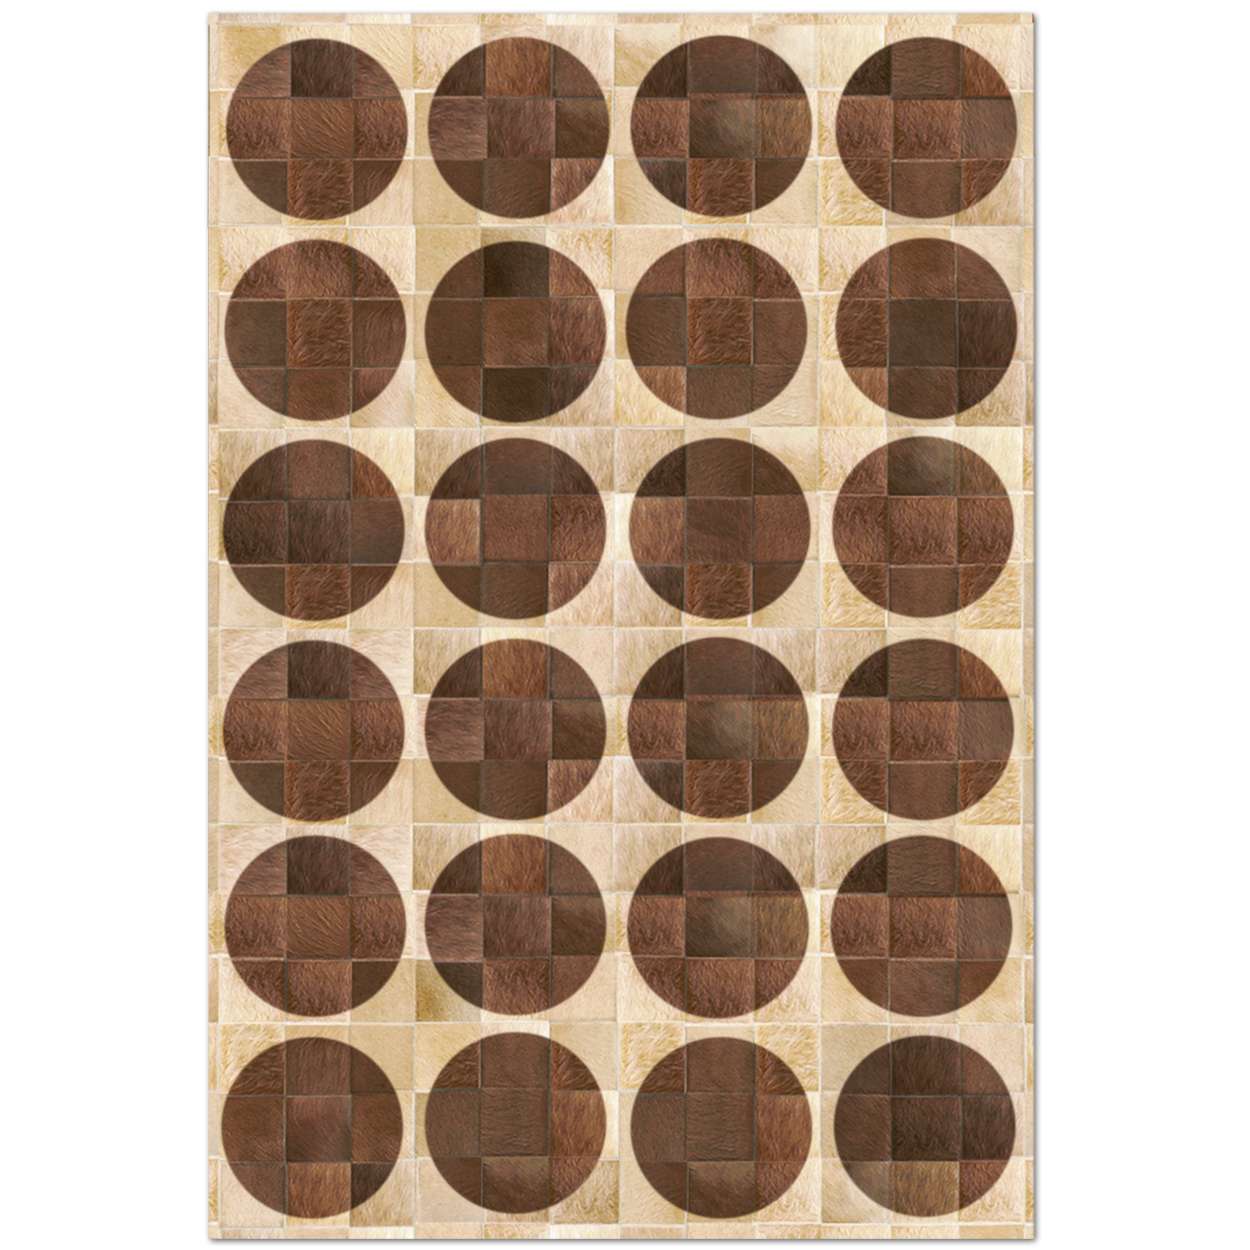 Custom Cowhide Patchwork Rug - 6in Squares - Tan with Dark Brown Circles 2